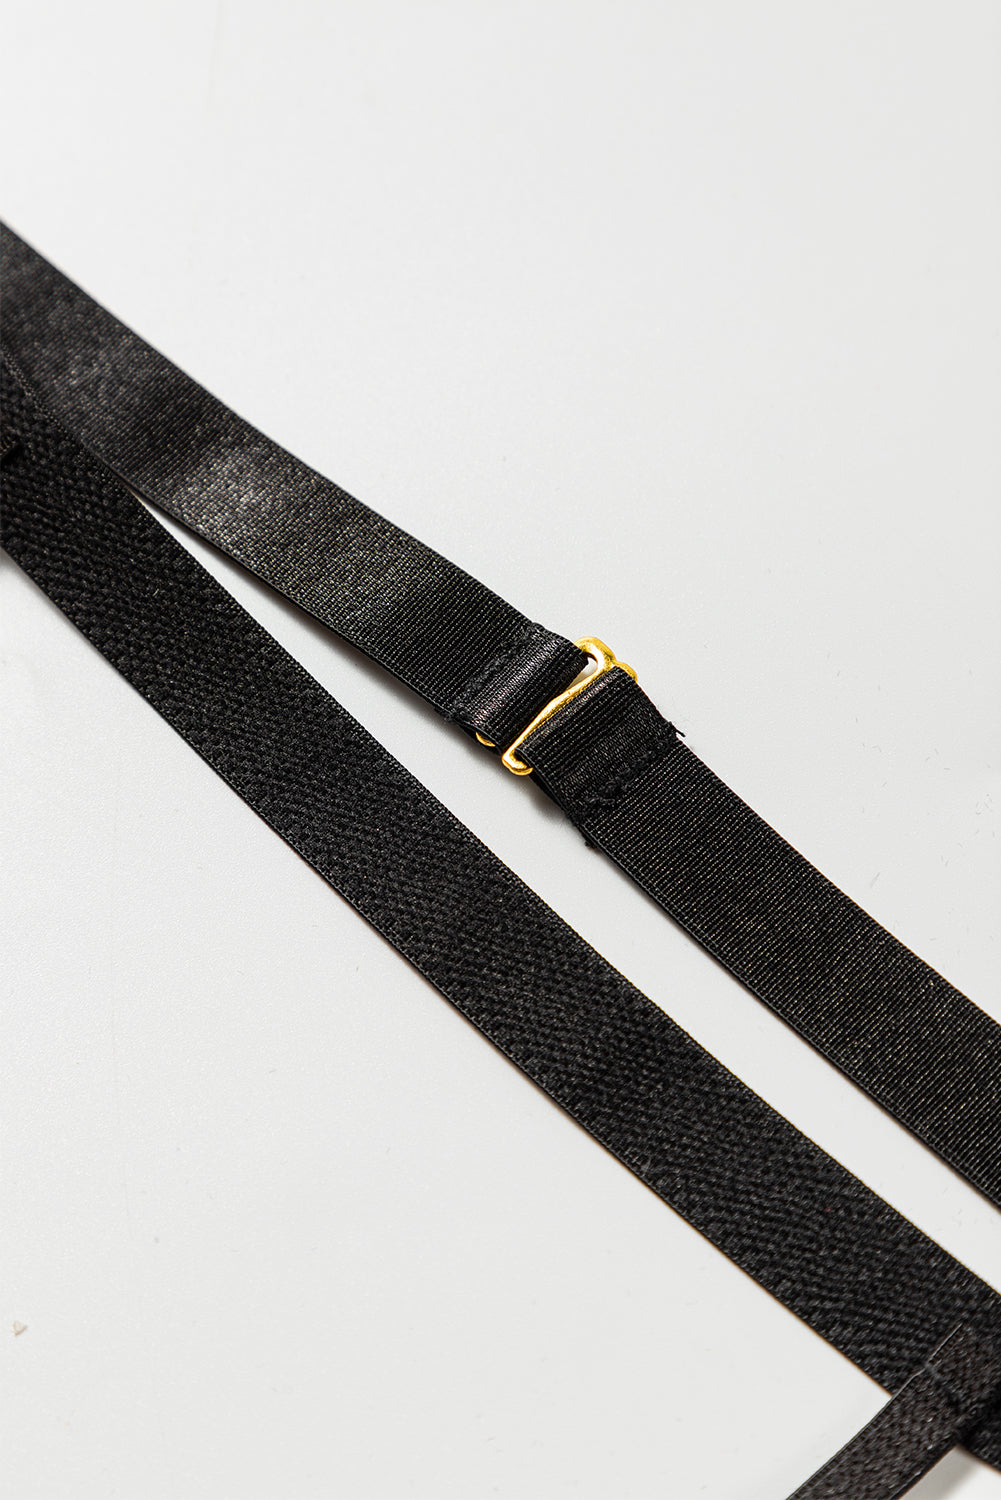 Black 3Pcs Gold Chain Decor Lace Strappy Gartered Lingerie Set